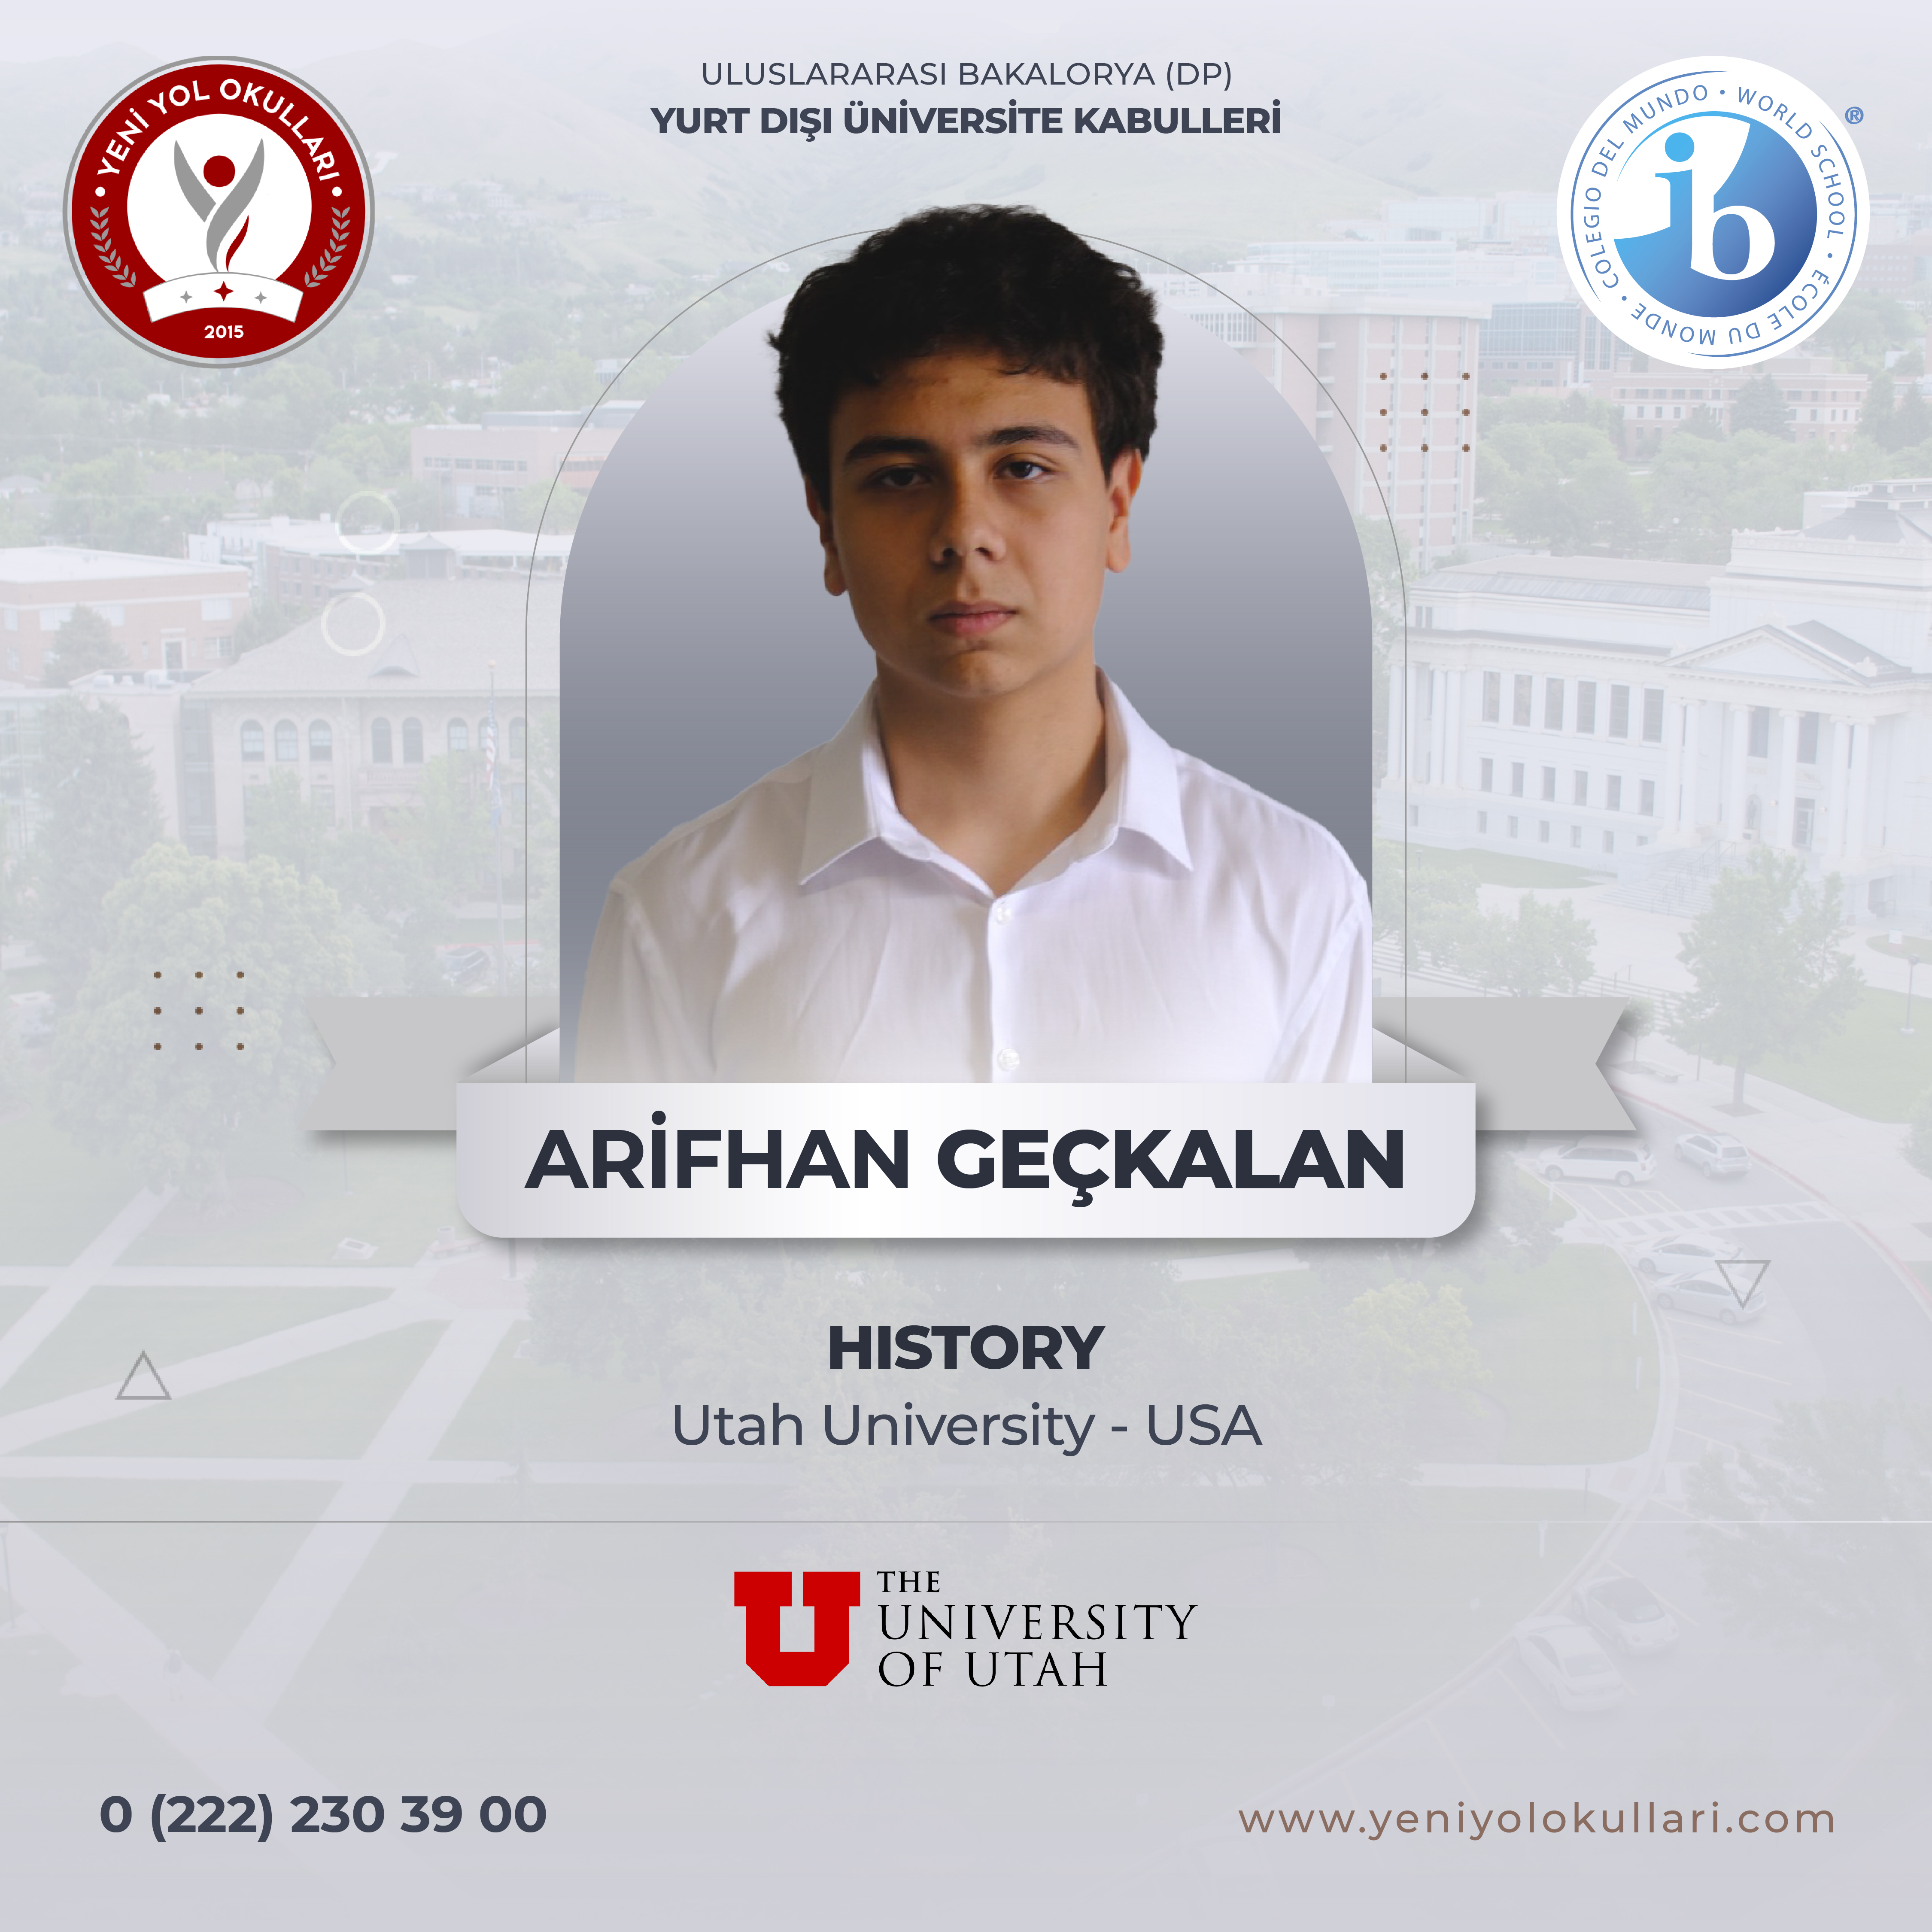 Yurt Dışı Üniversite Kabulleri - Arifhan Geçkalan Detay